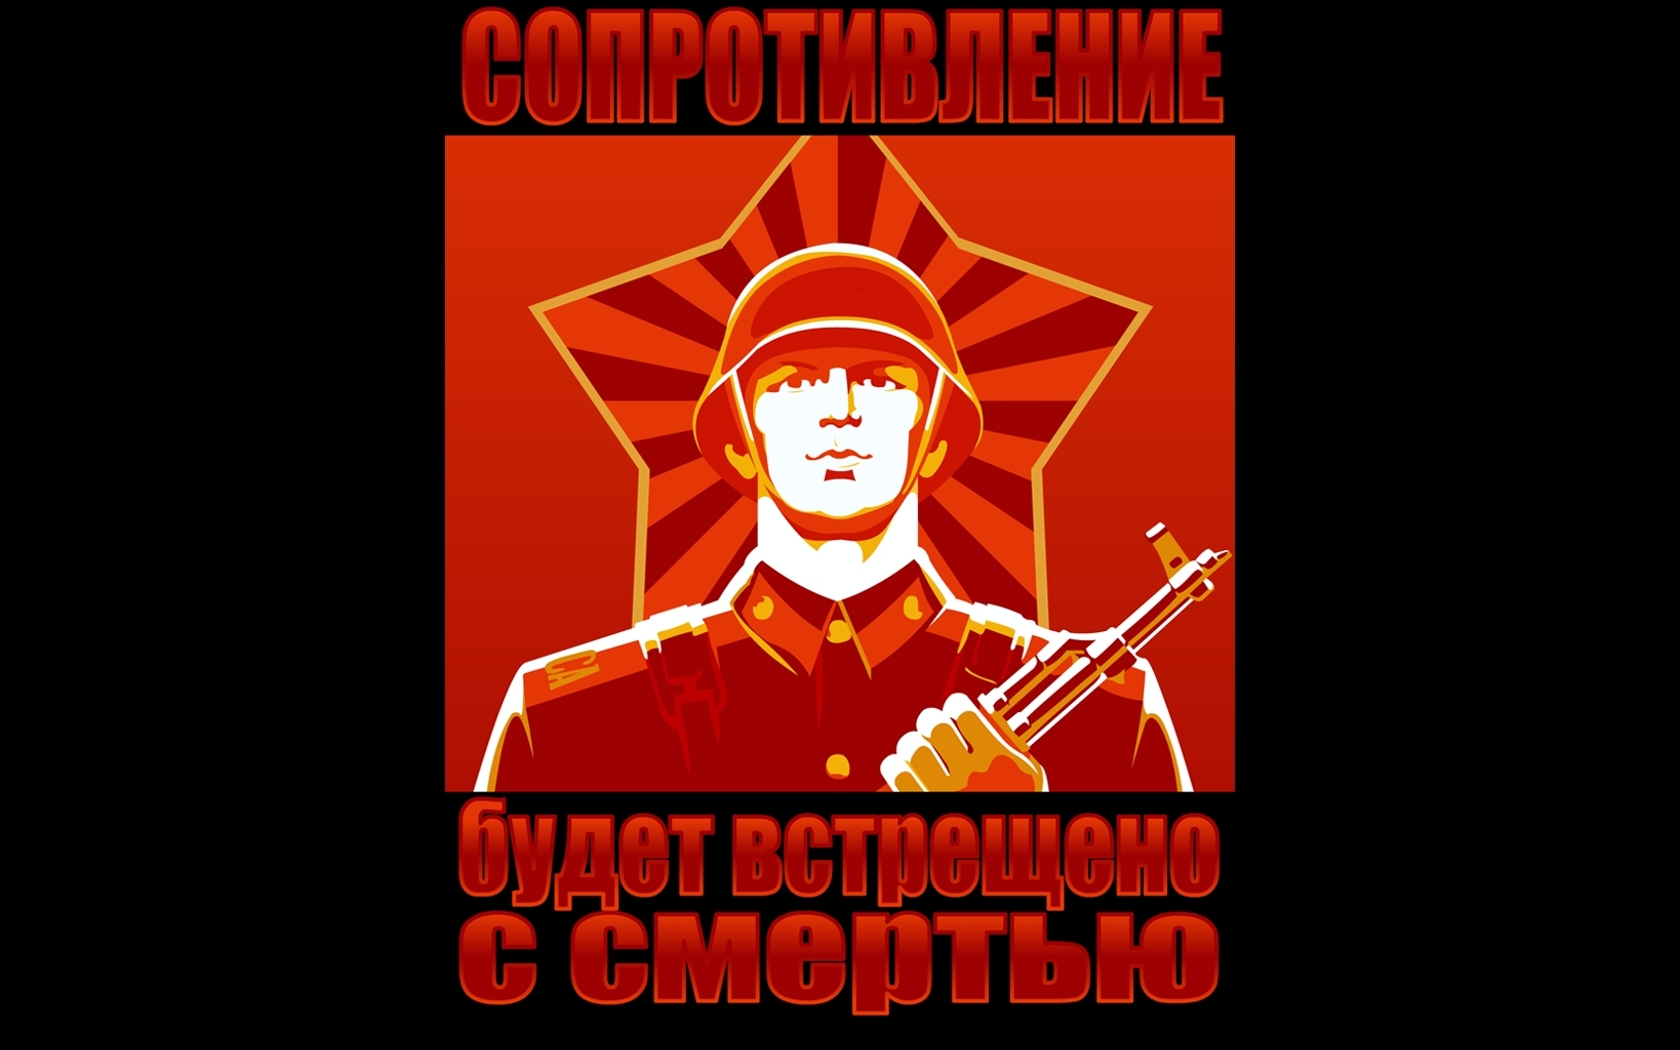 Cccp Ussr Munism Propaganda Red Wallpaper Hq Pictures